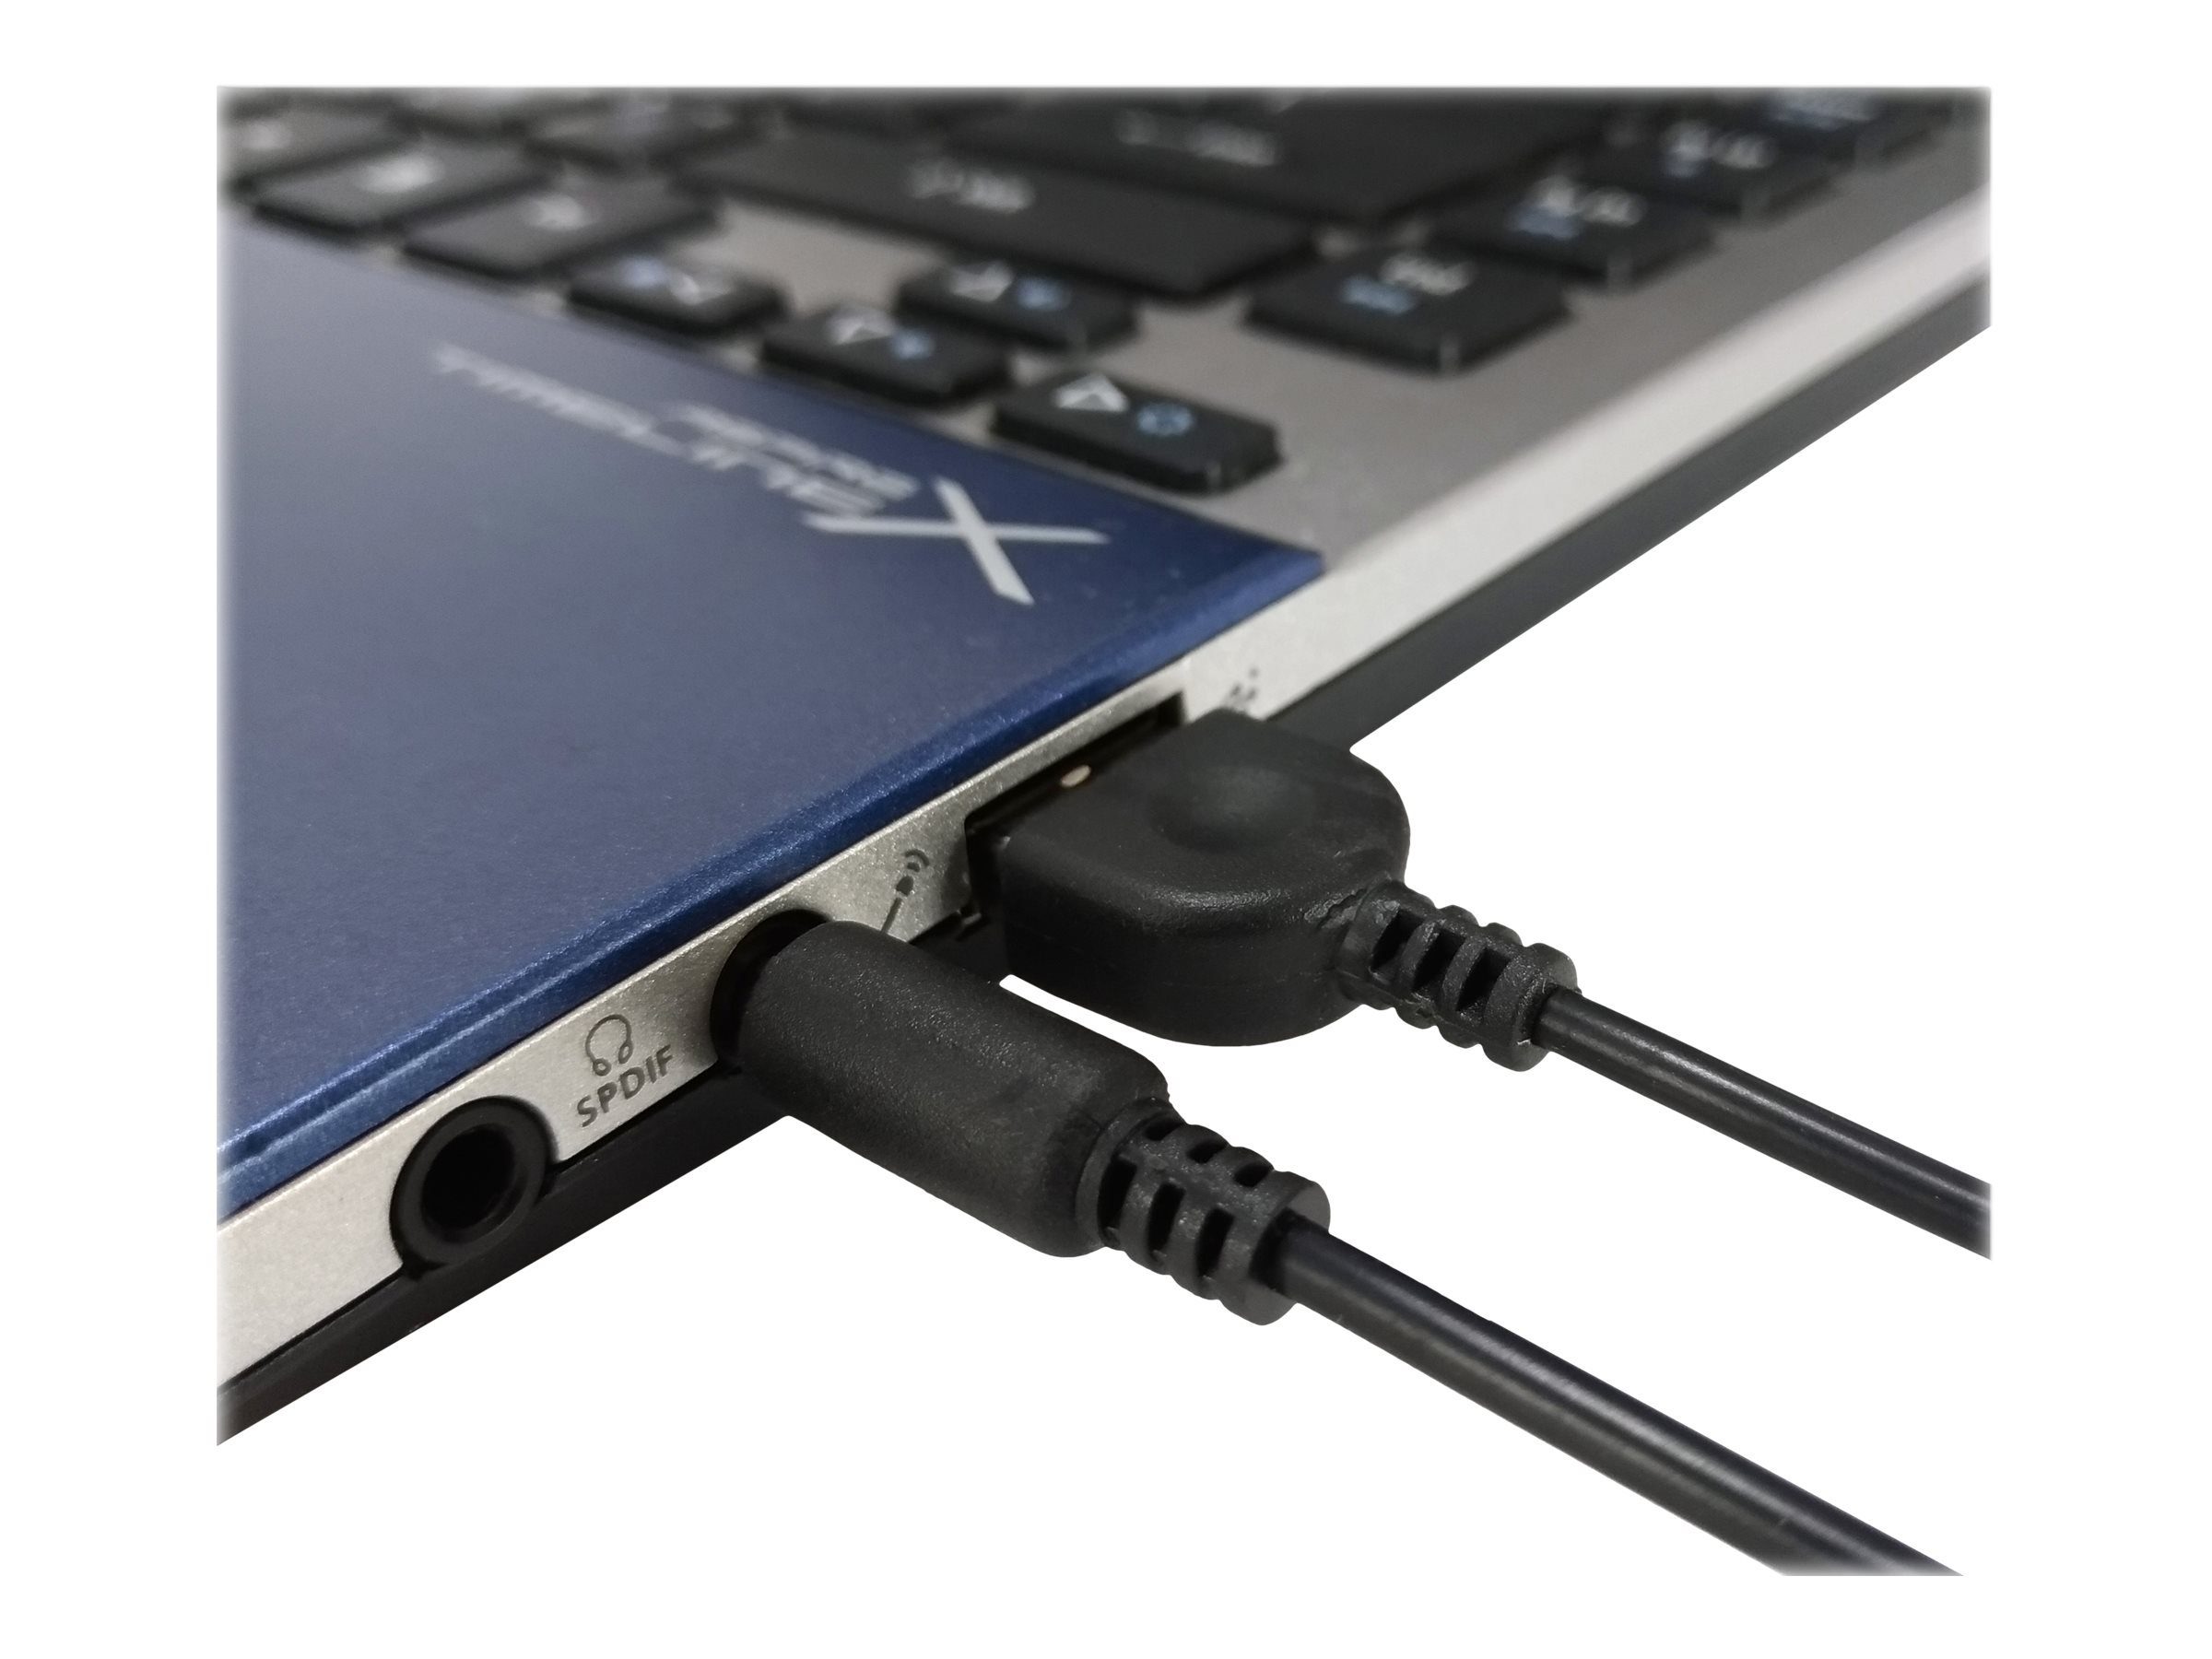 Notebook schwarz Lautsprecher f. Mini u. PC-Lautsprecher DIGITAL EQUIP USB PC, DATA